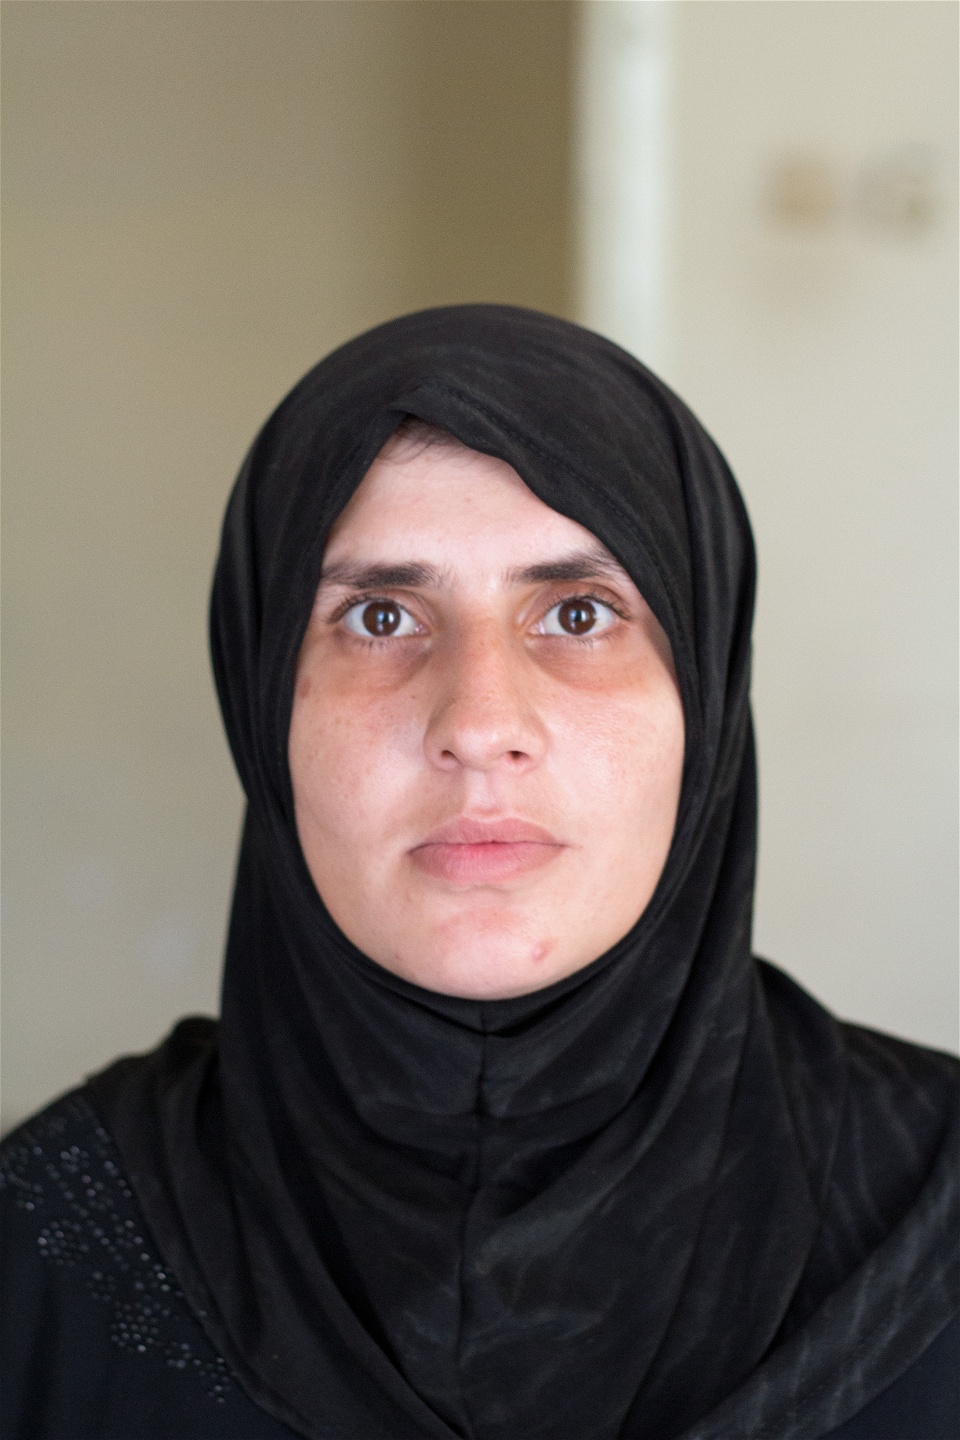 Sarah, 27 år, från Jable i Syrien.